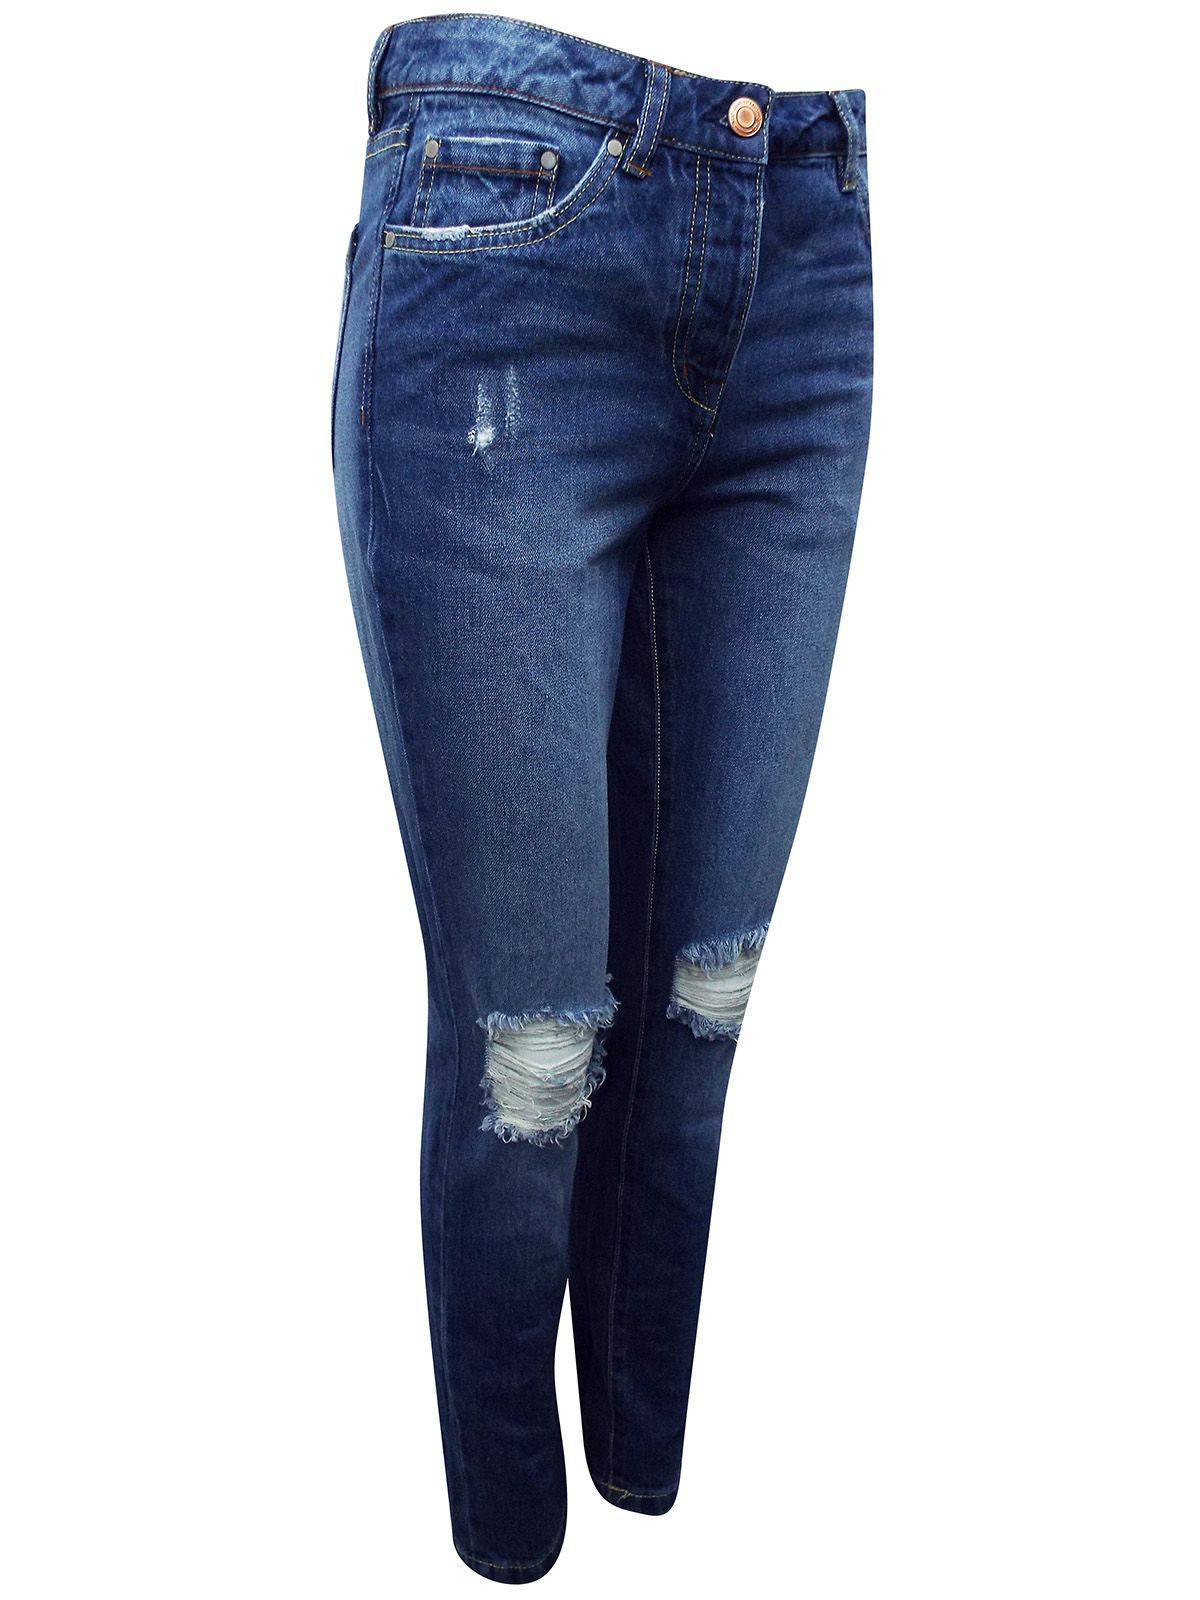 N3xt DENIM BLUE Boyfit Ripped Knees Jeans - Size 6 to 20 (Leg R/29in-L ...